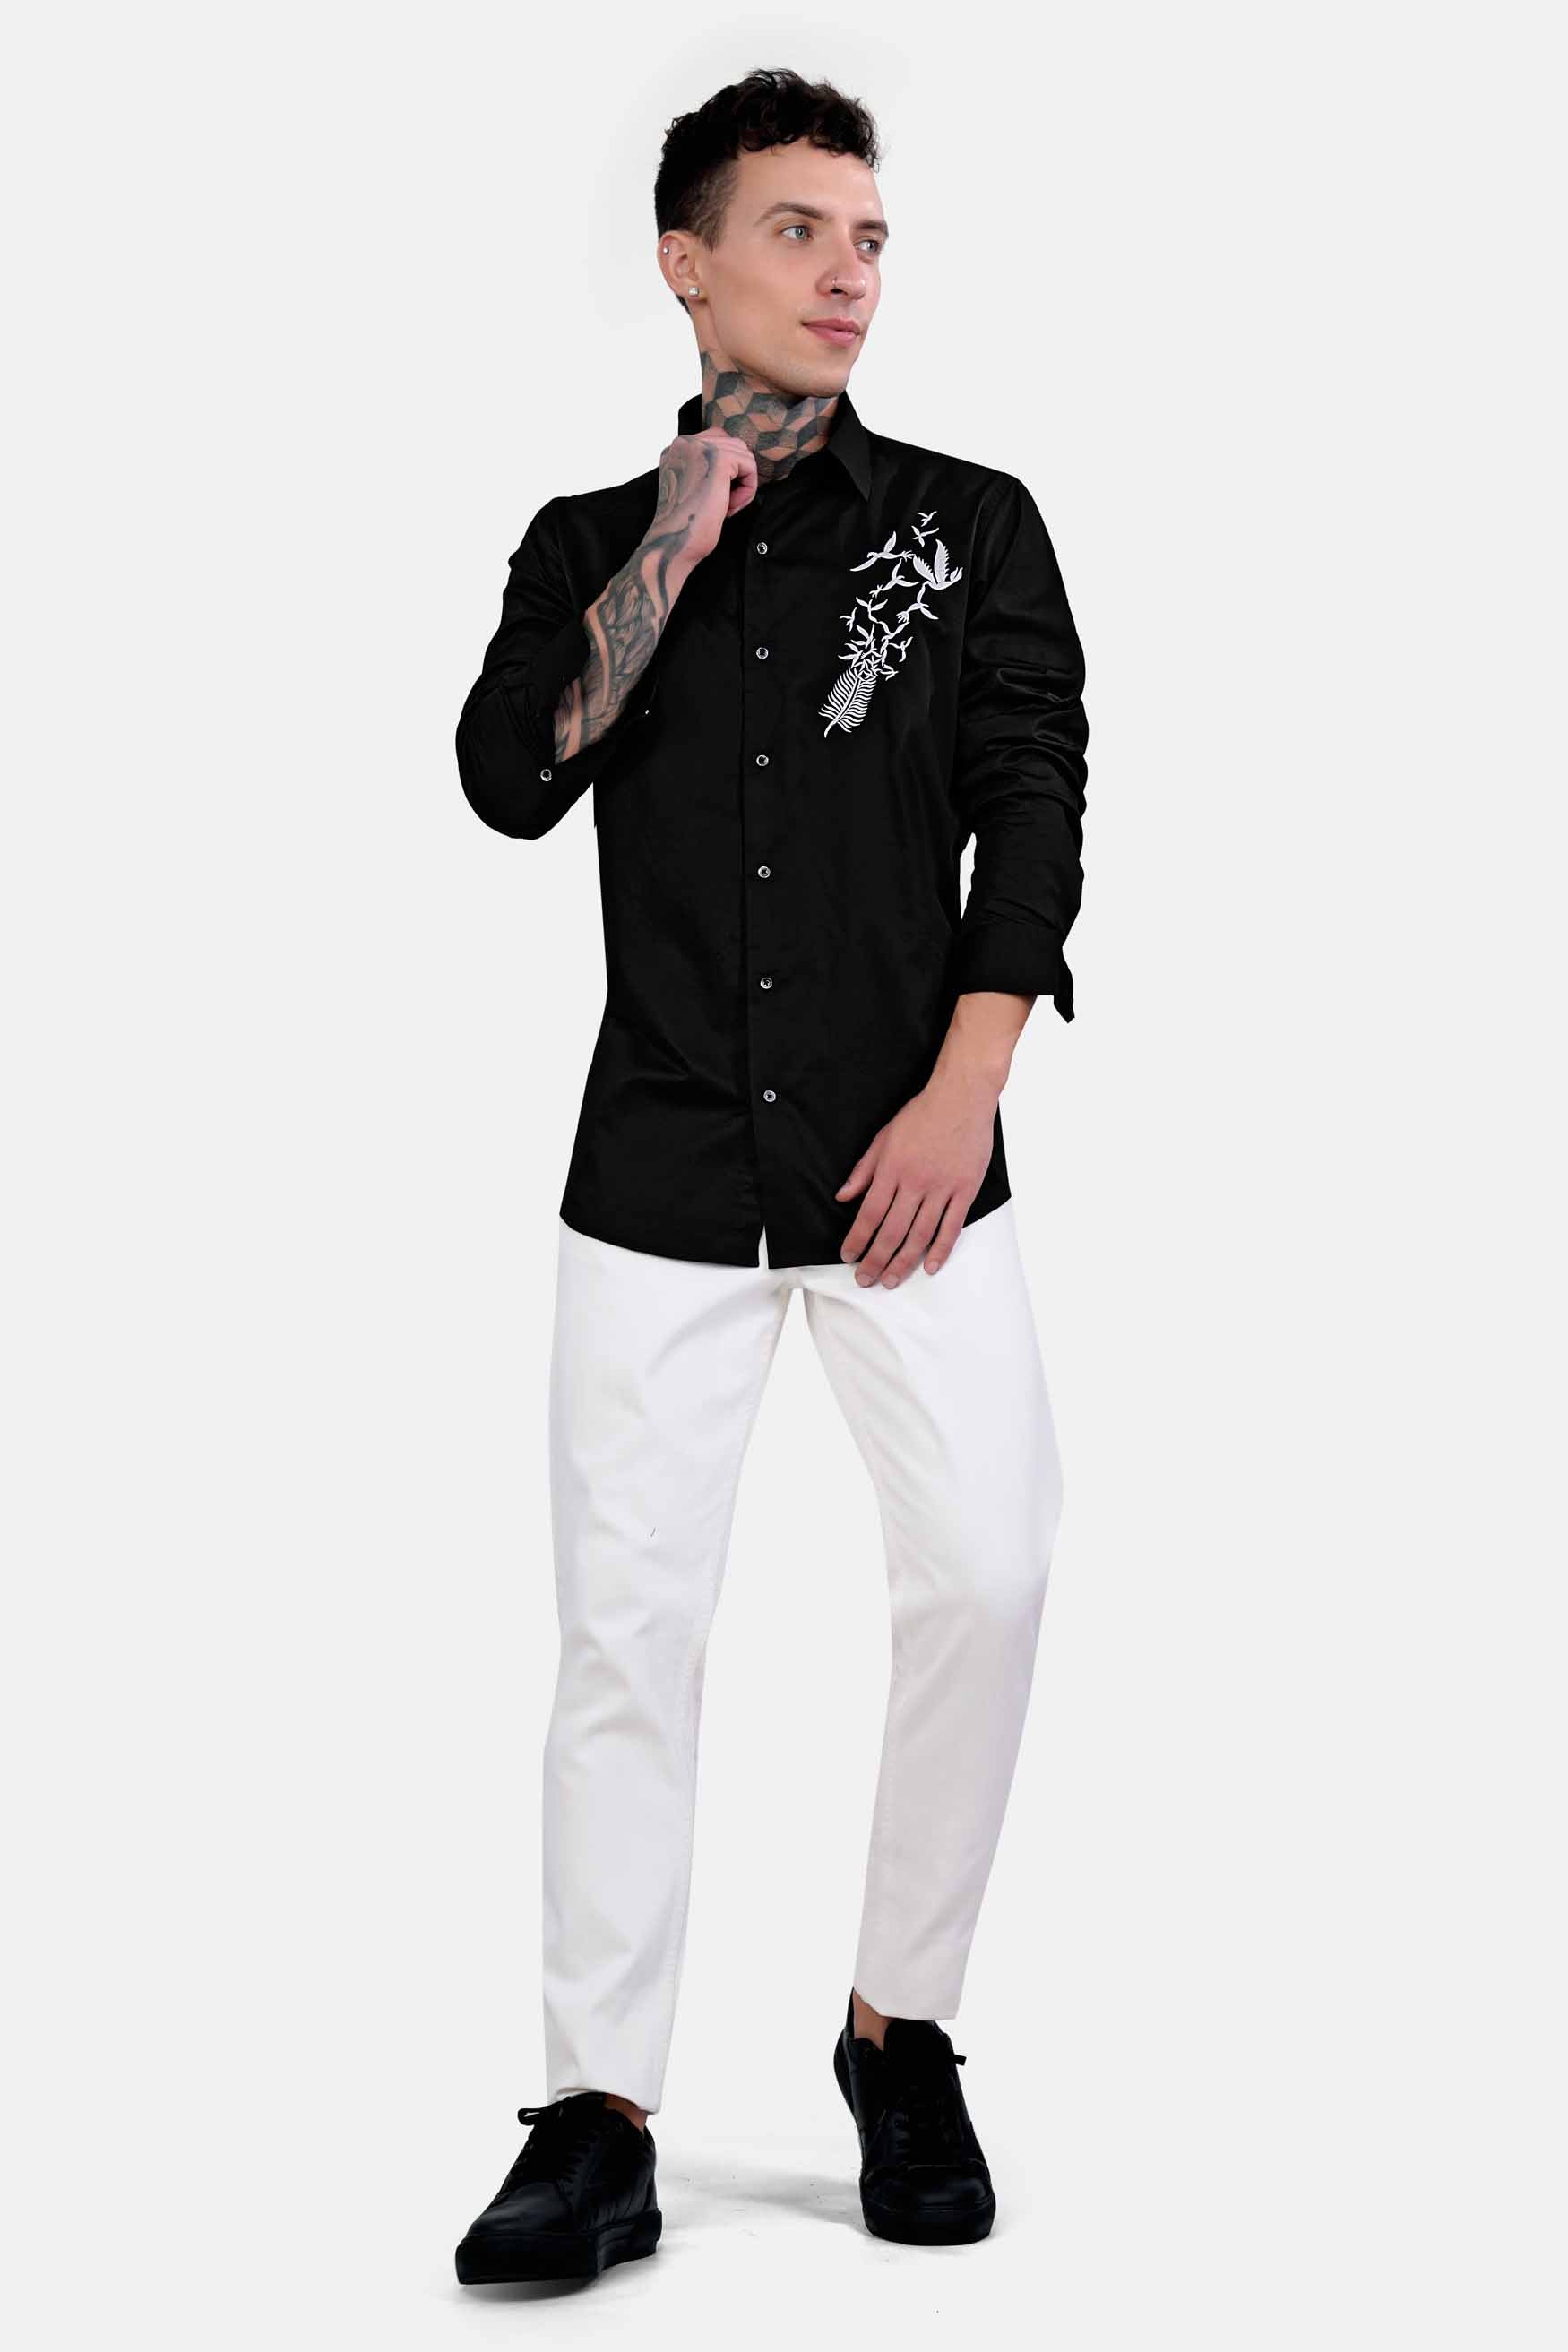 Jade Black Birds Embroidered Subtle Sheen Super Soft Premium Cotton Designer Shirt